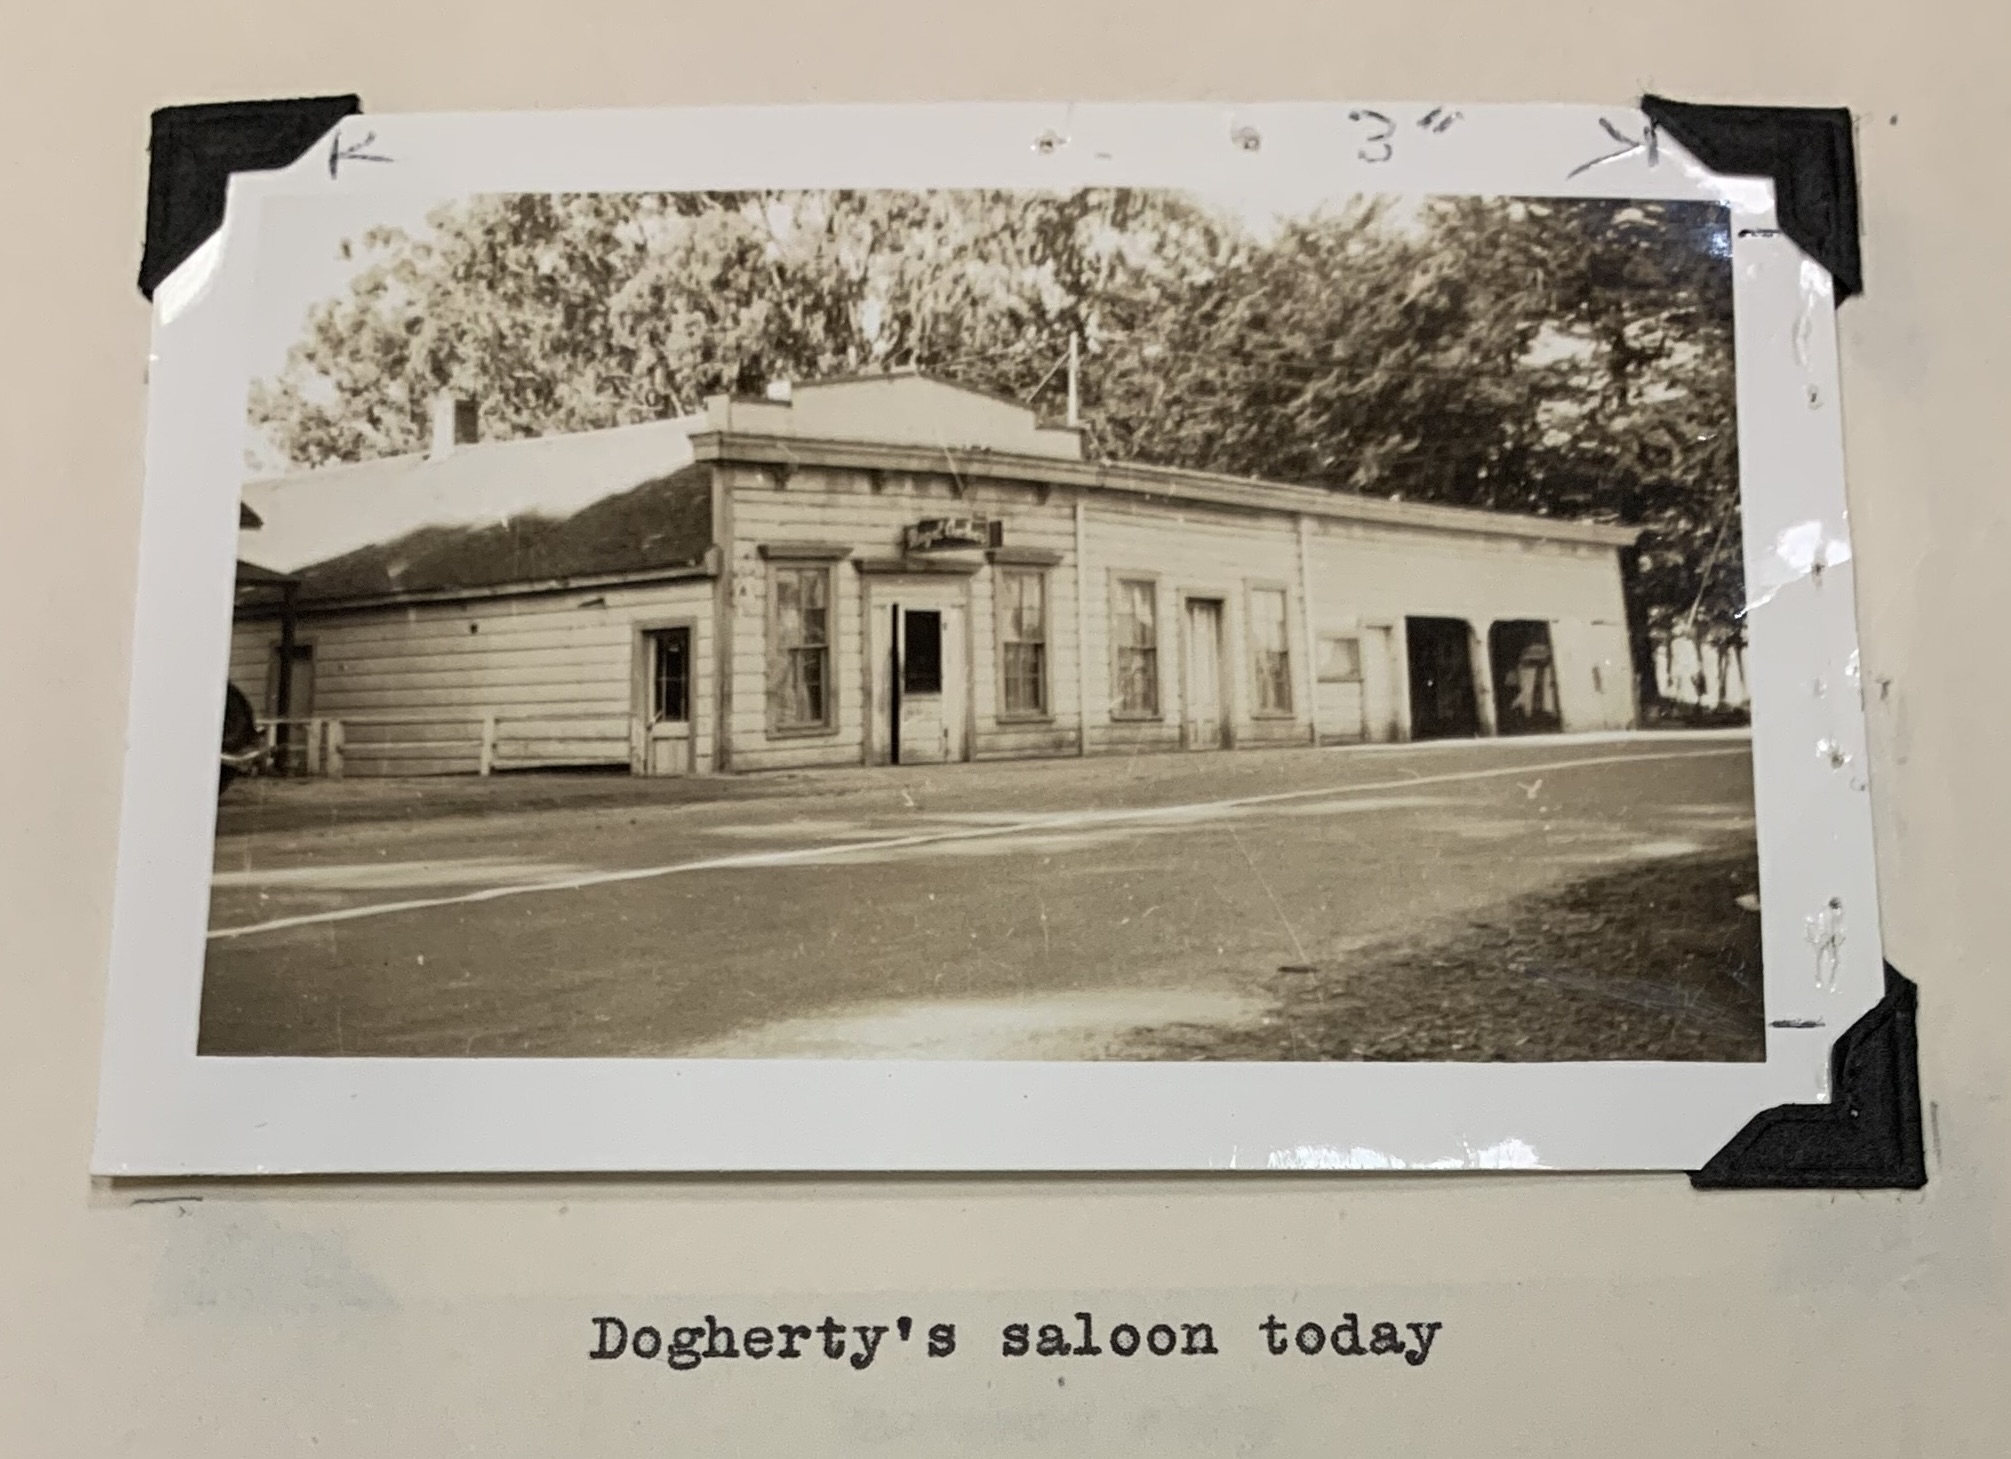 A 1930s era photograph of a saloon.